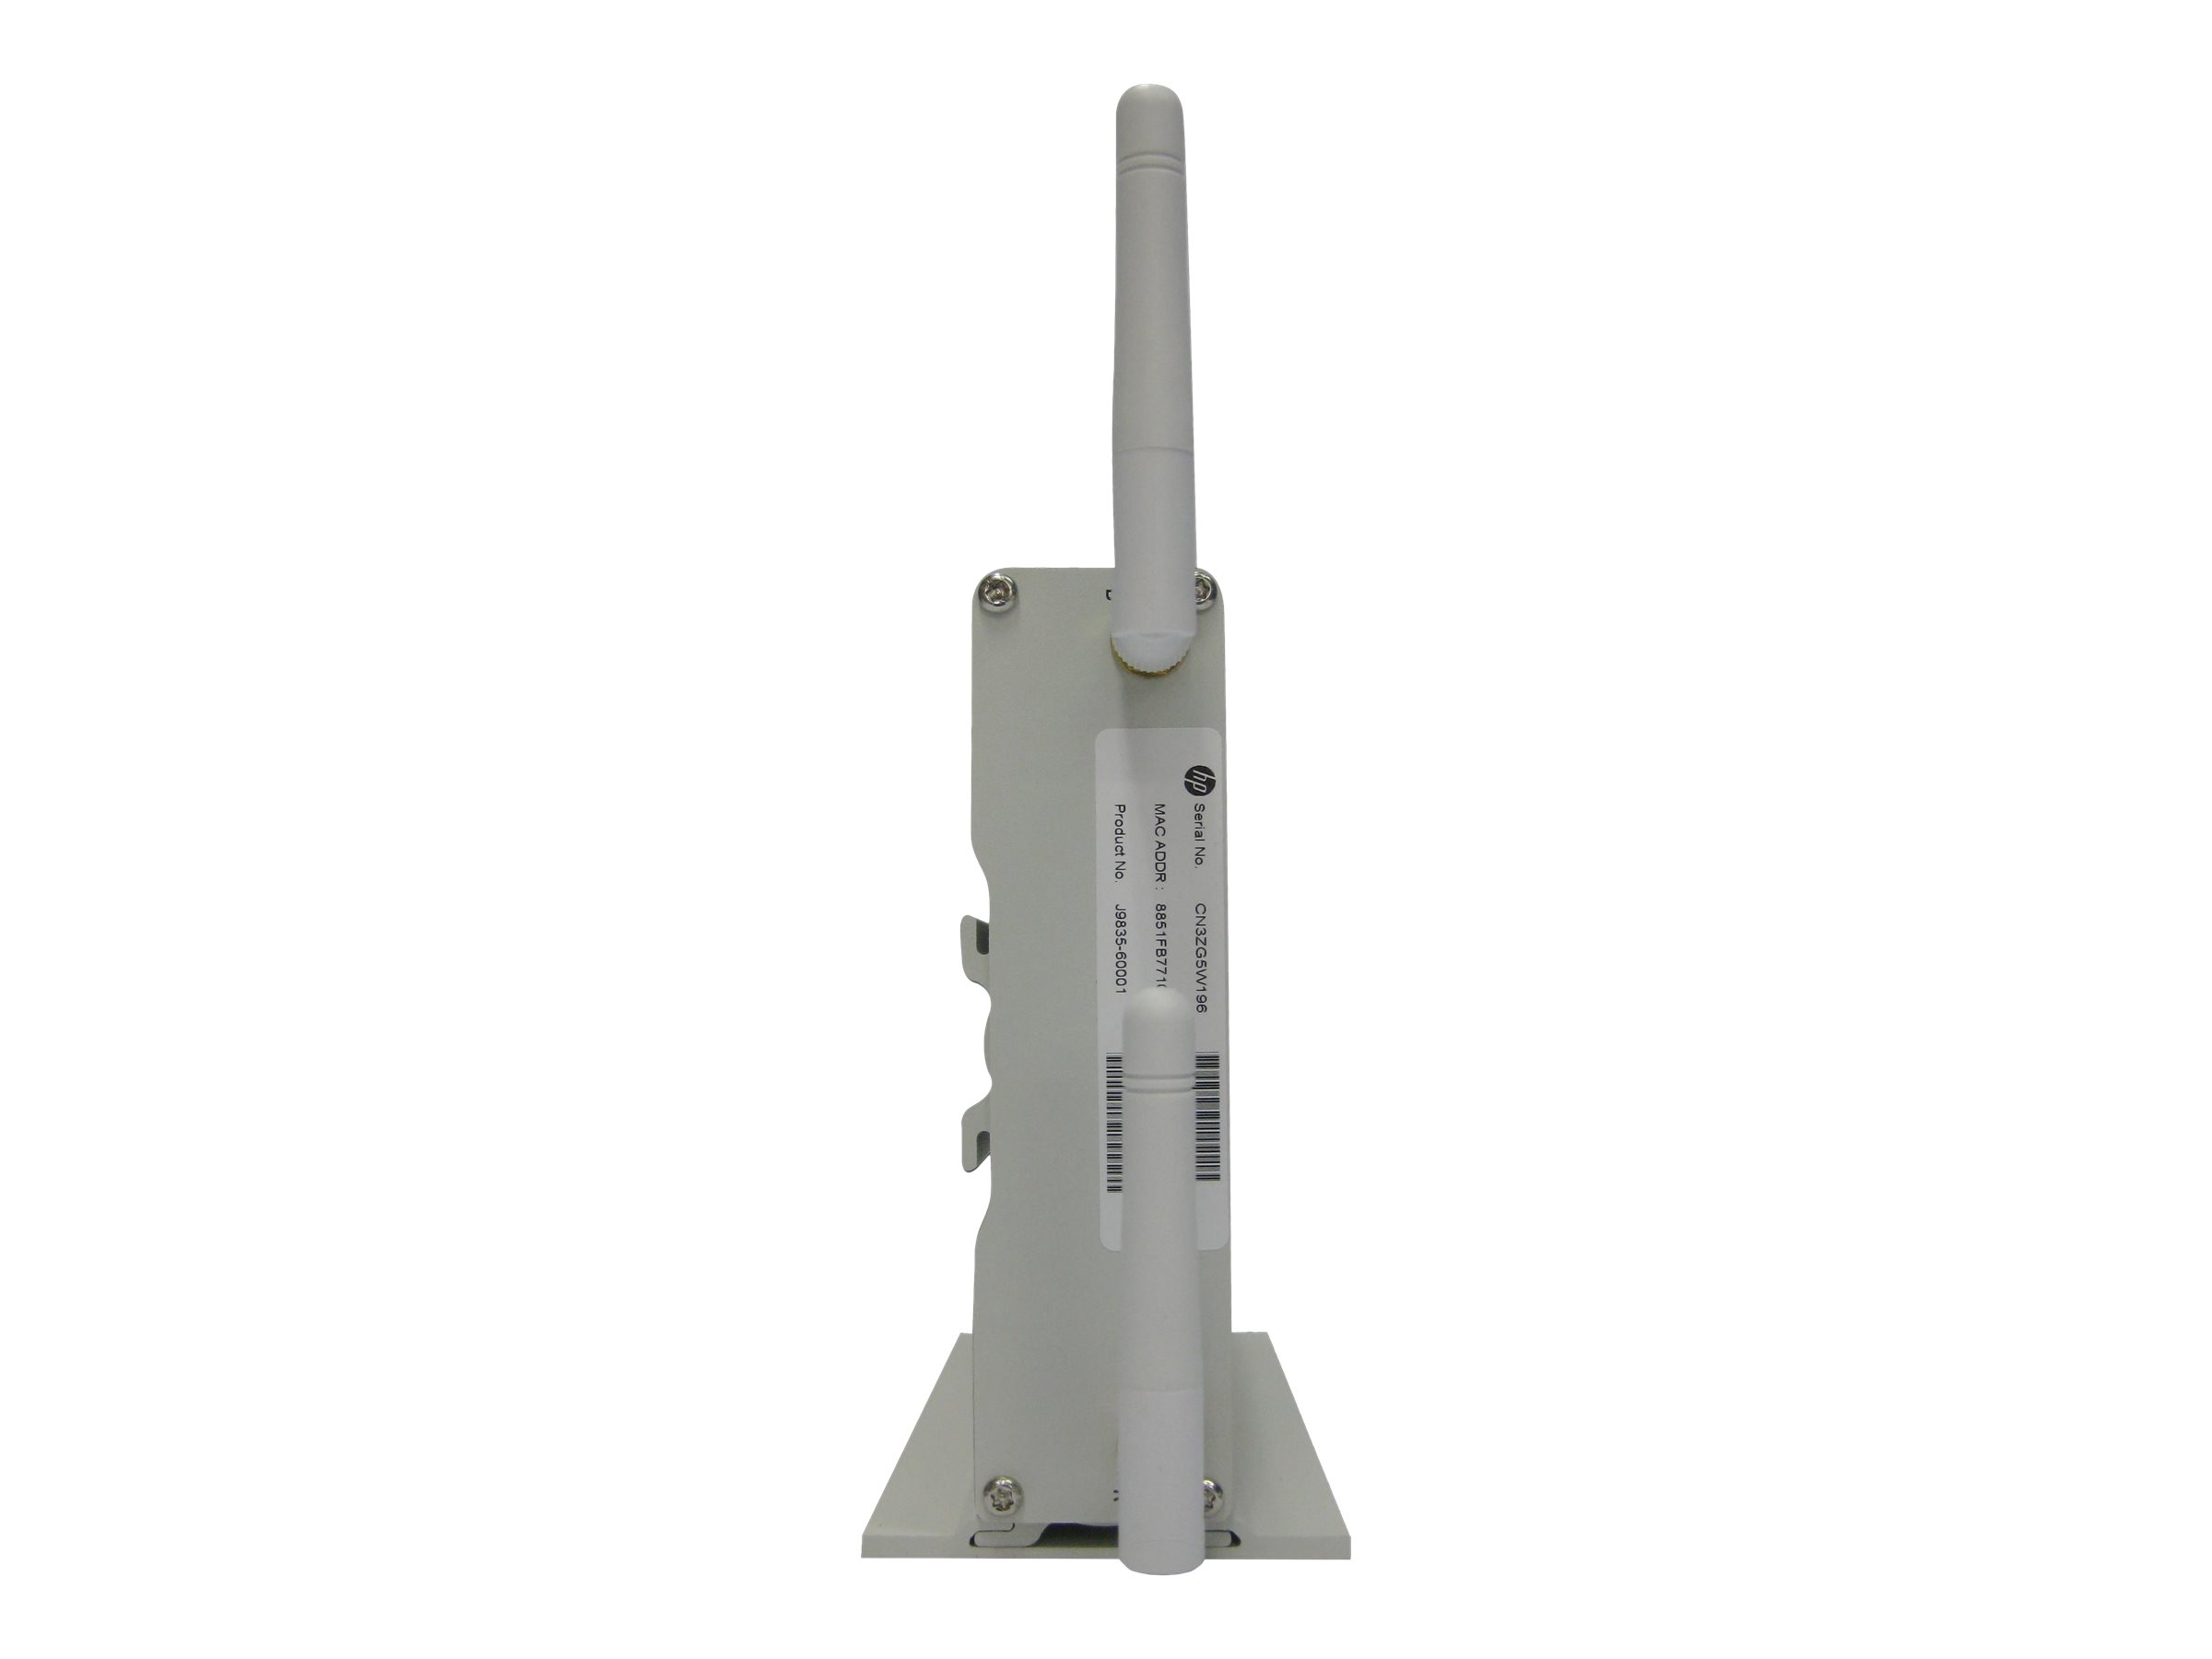 HPE 501 Wireless Client Bridge - Wireless Router - GigE - 802.11a/b/g/n/ac - Dual-Band - wandmontierbar